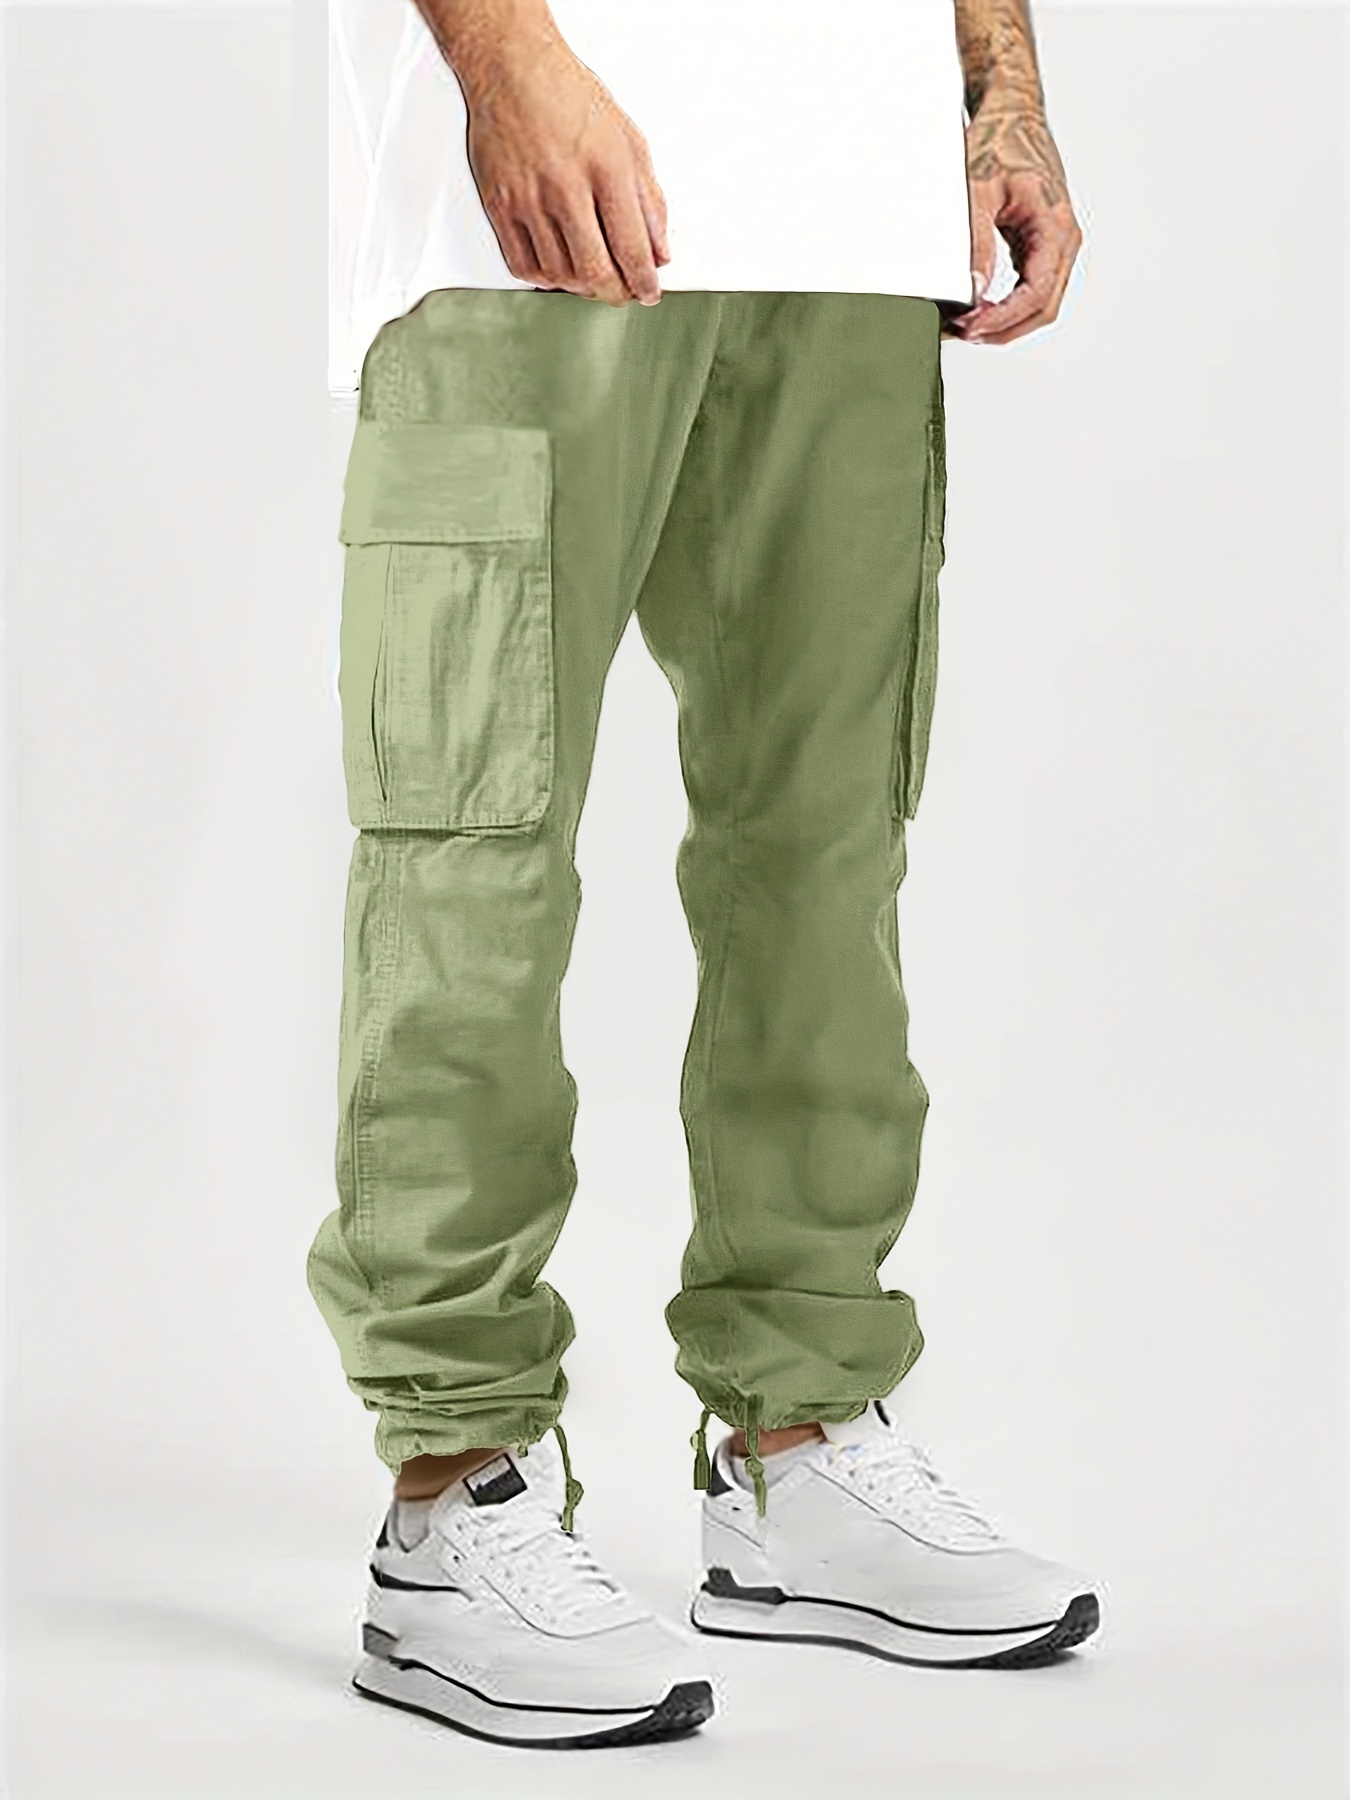 Hndudnff Men's Cargo Pants Loose Straight Multi Pocket Pants Solid